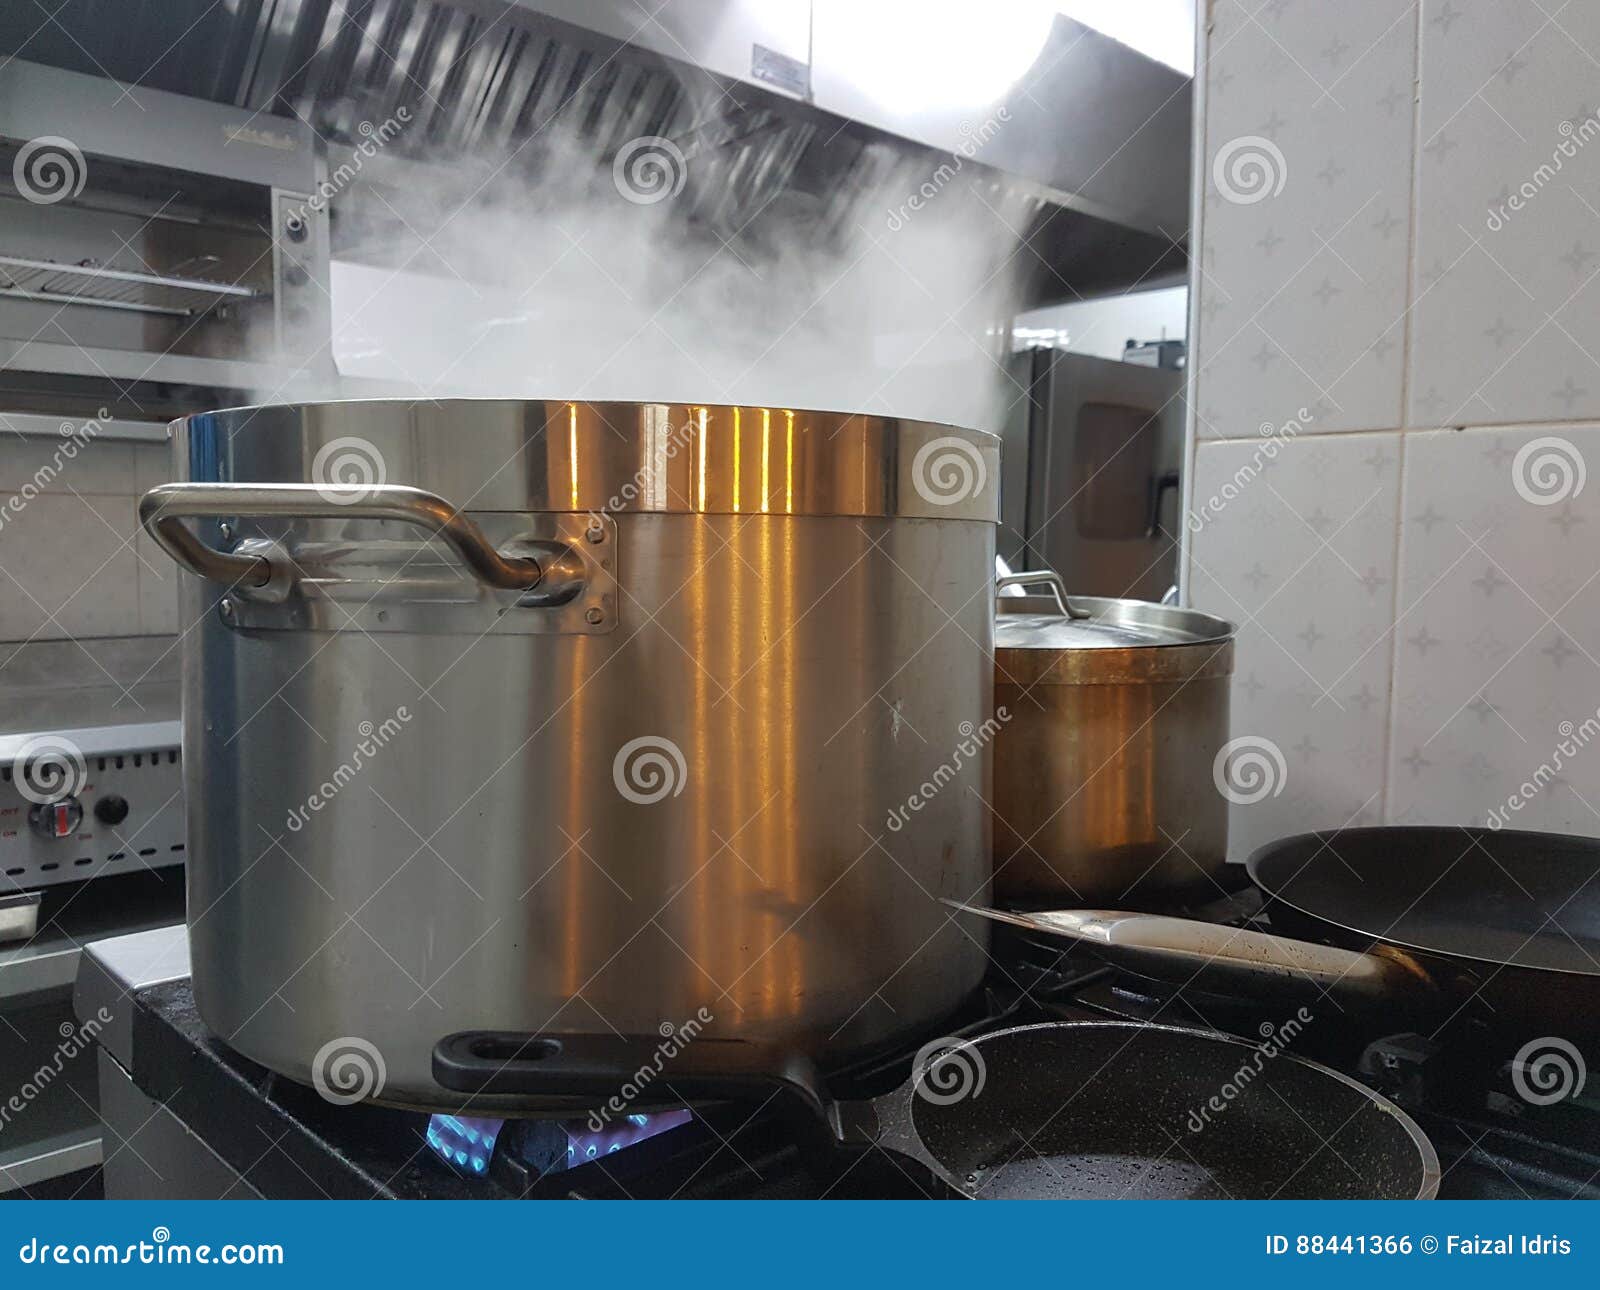 https://thumbs.dreamstime.com/z/cooking-pot-stove-inside-kitchen-88441366.jpg